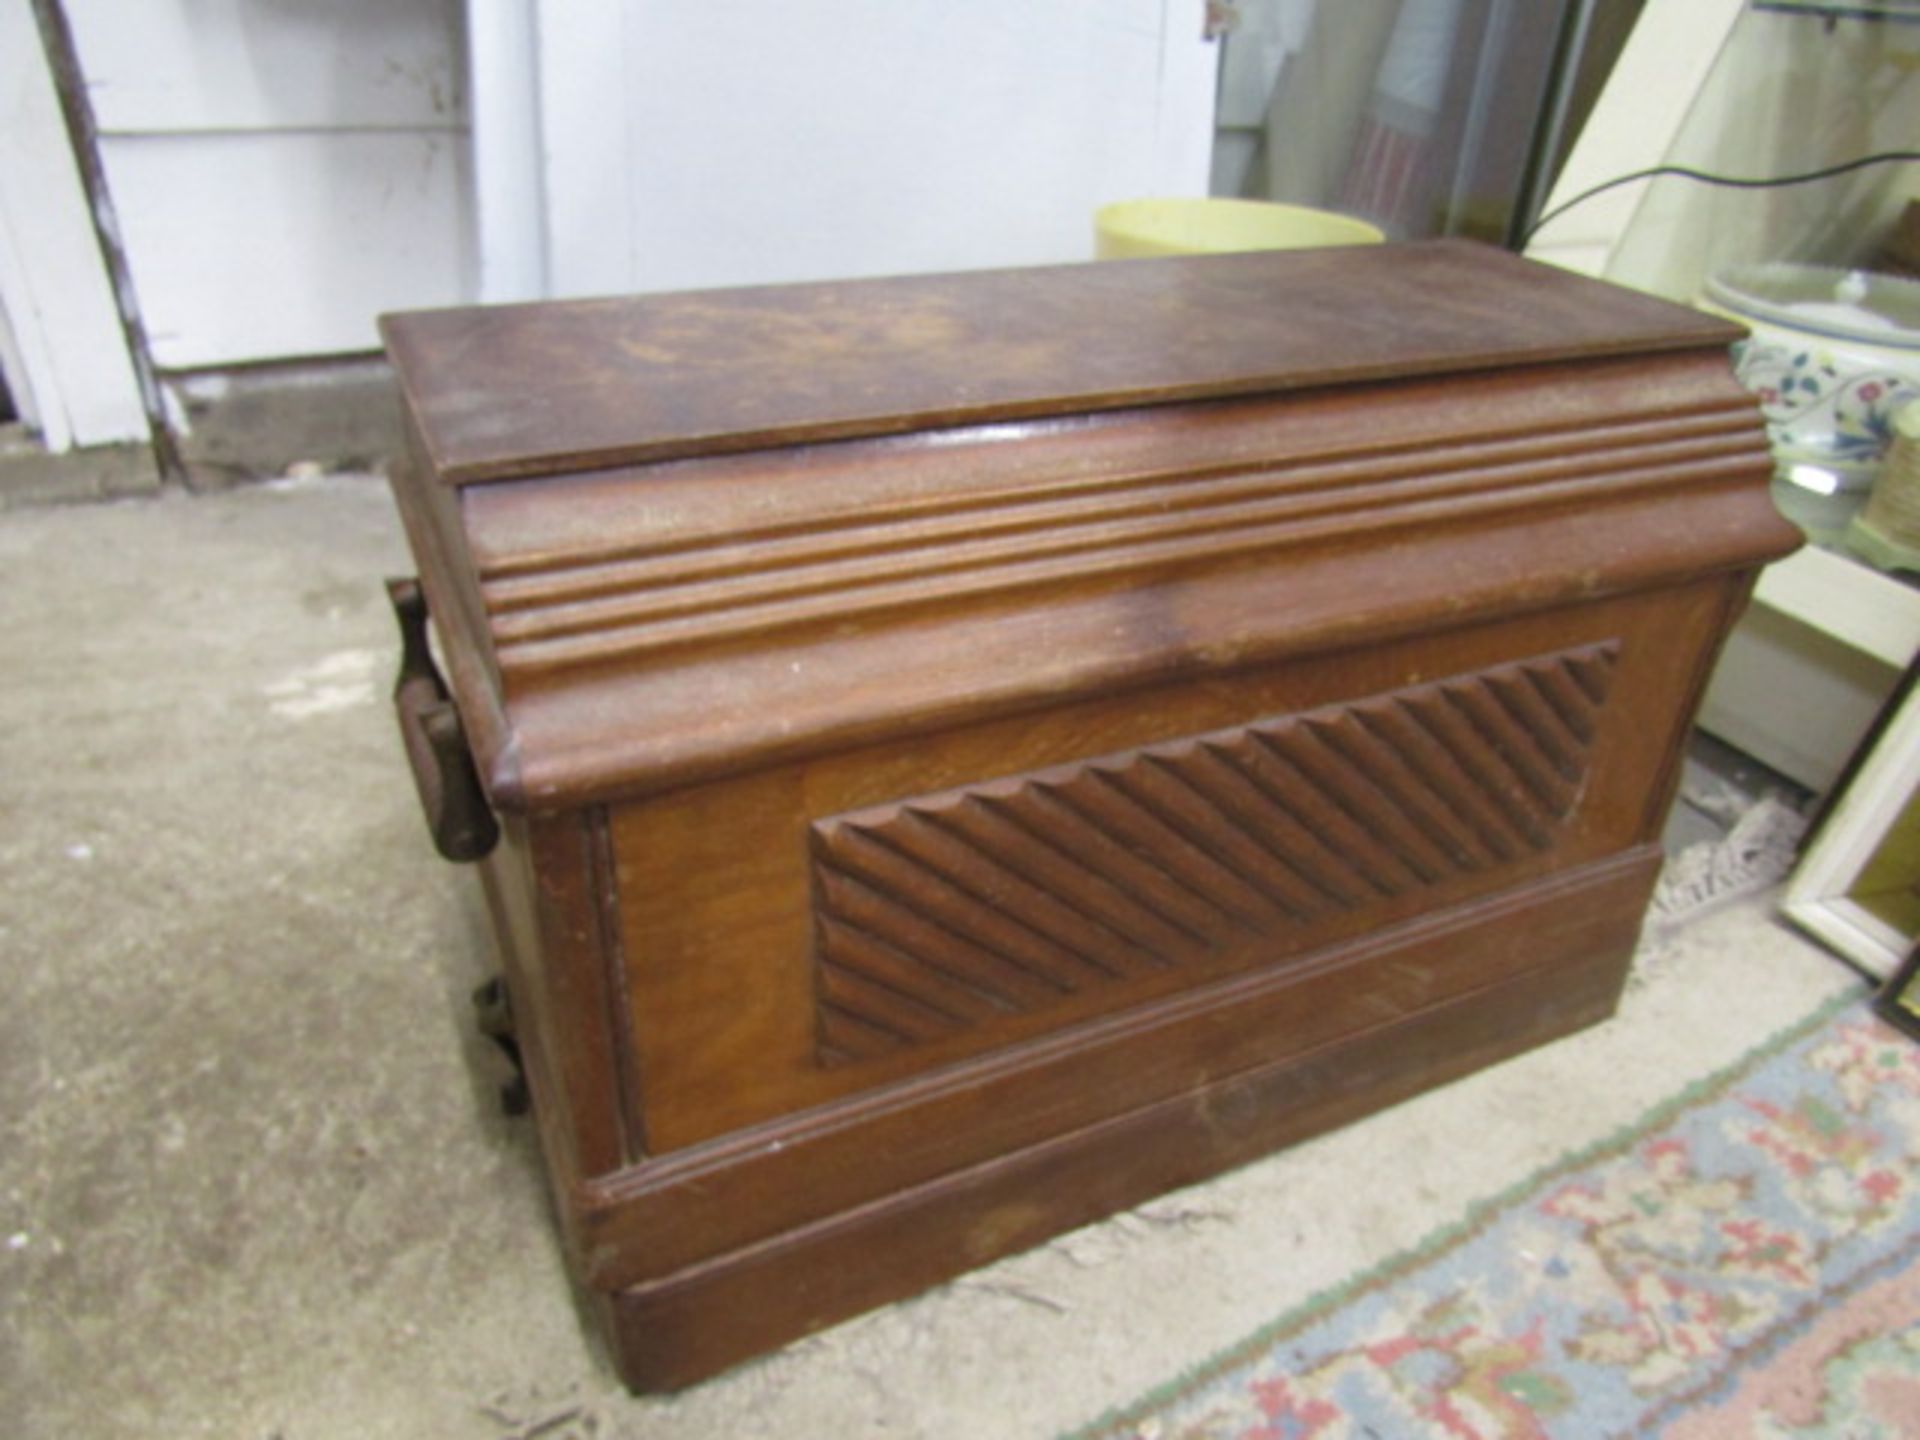 Vintage Singer sewing machine in wooden case - Image 3 of 3